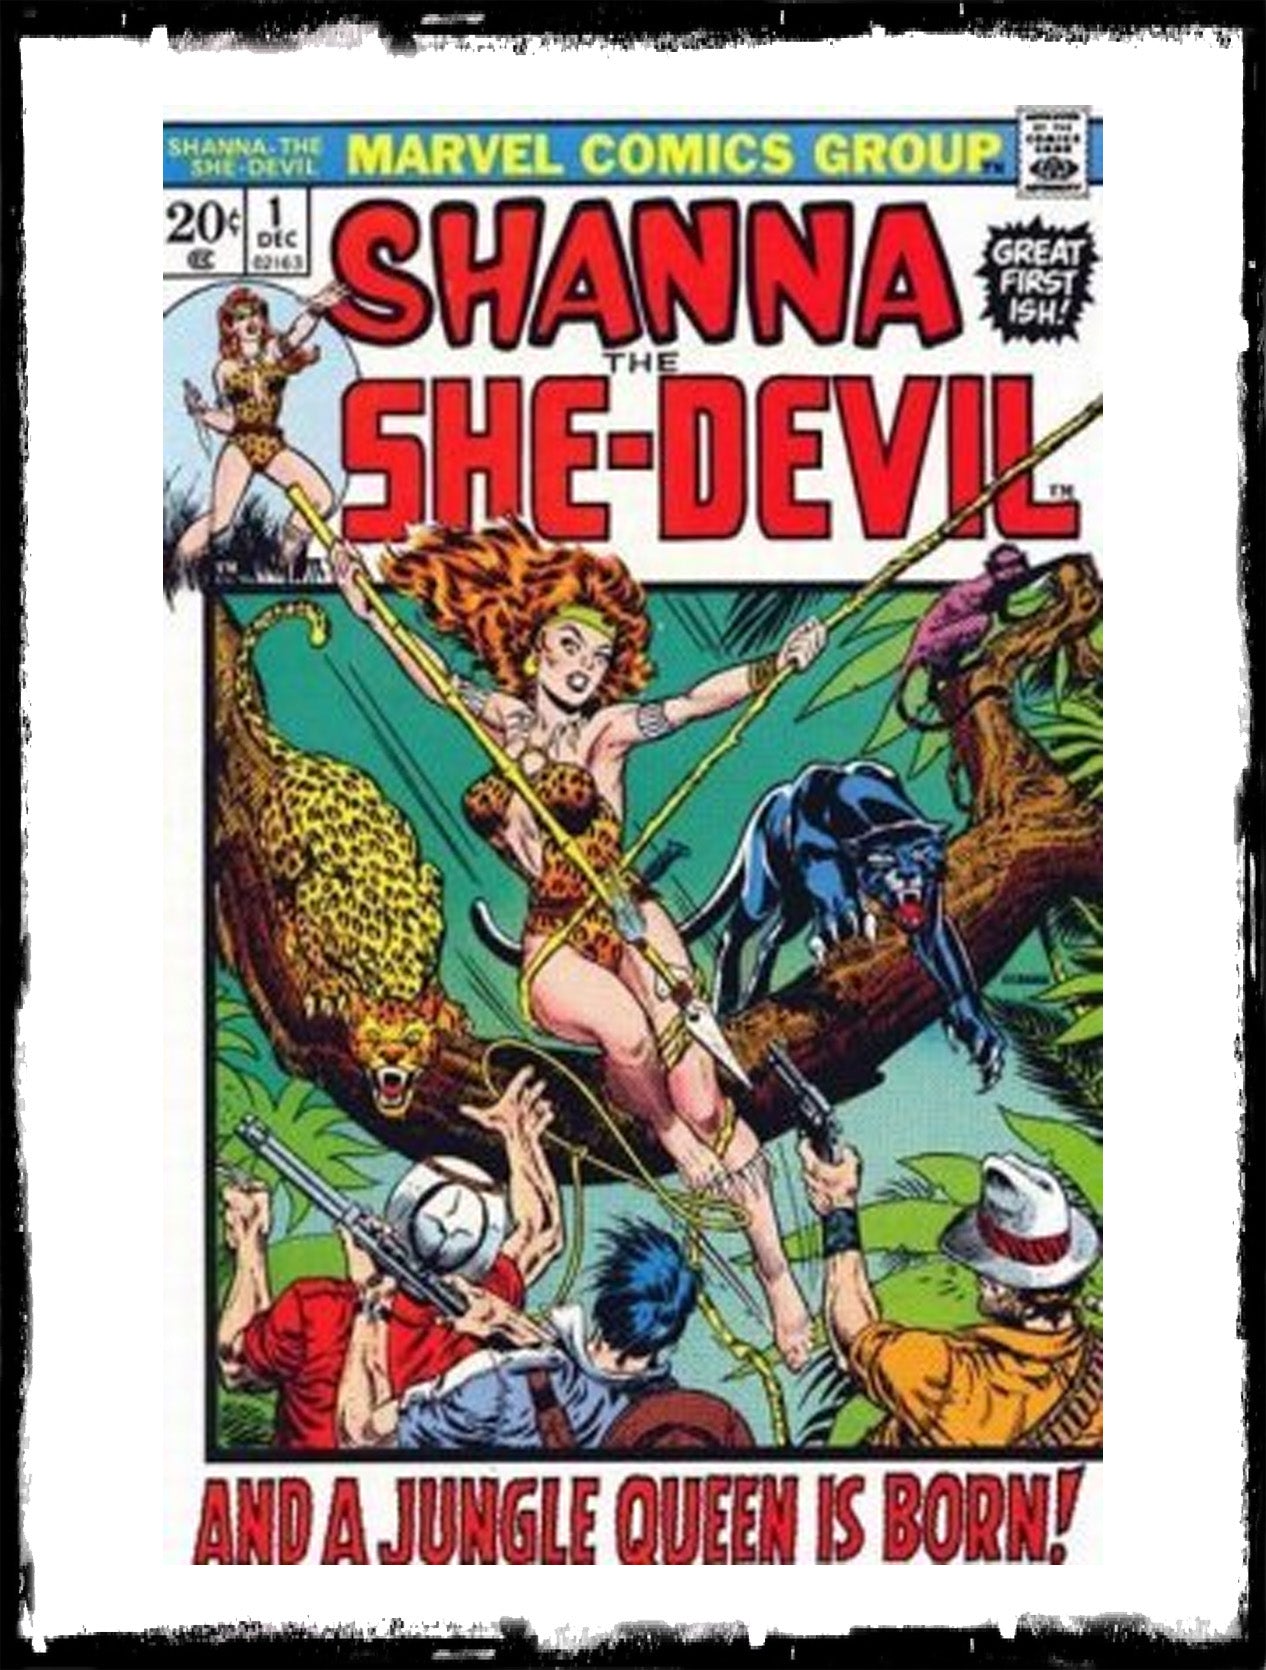 SHANNA THE SHE-DEVIL - #1 FIRST SHANNA THE SHE-DEVIL (1972 - FN-/FN)